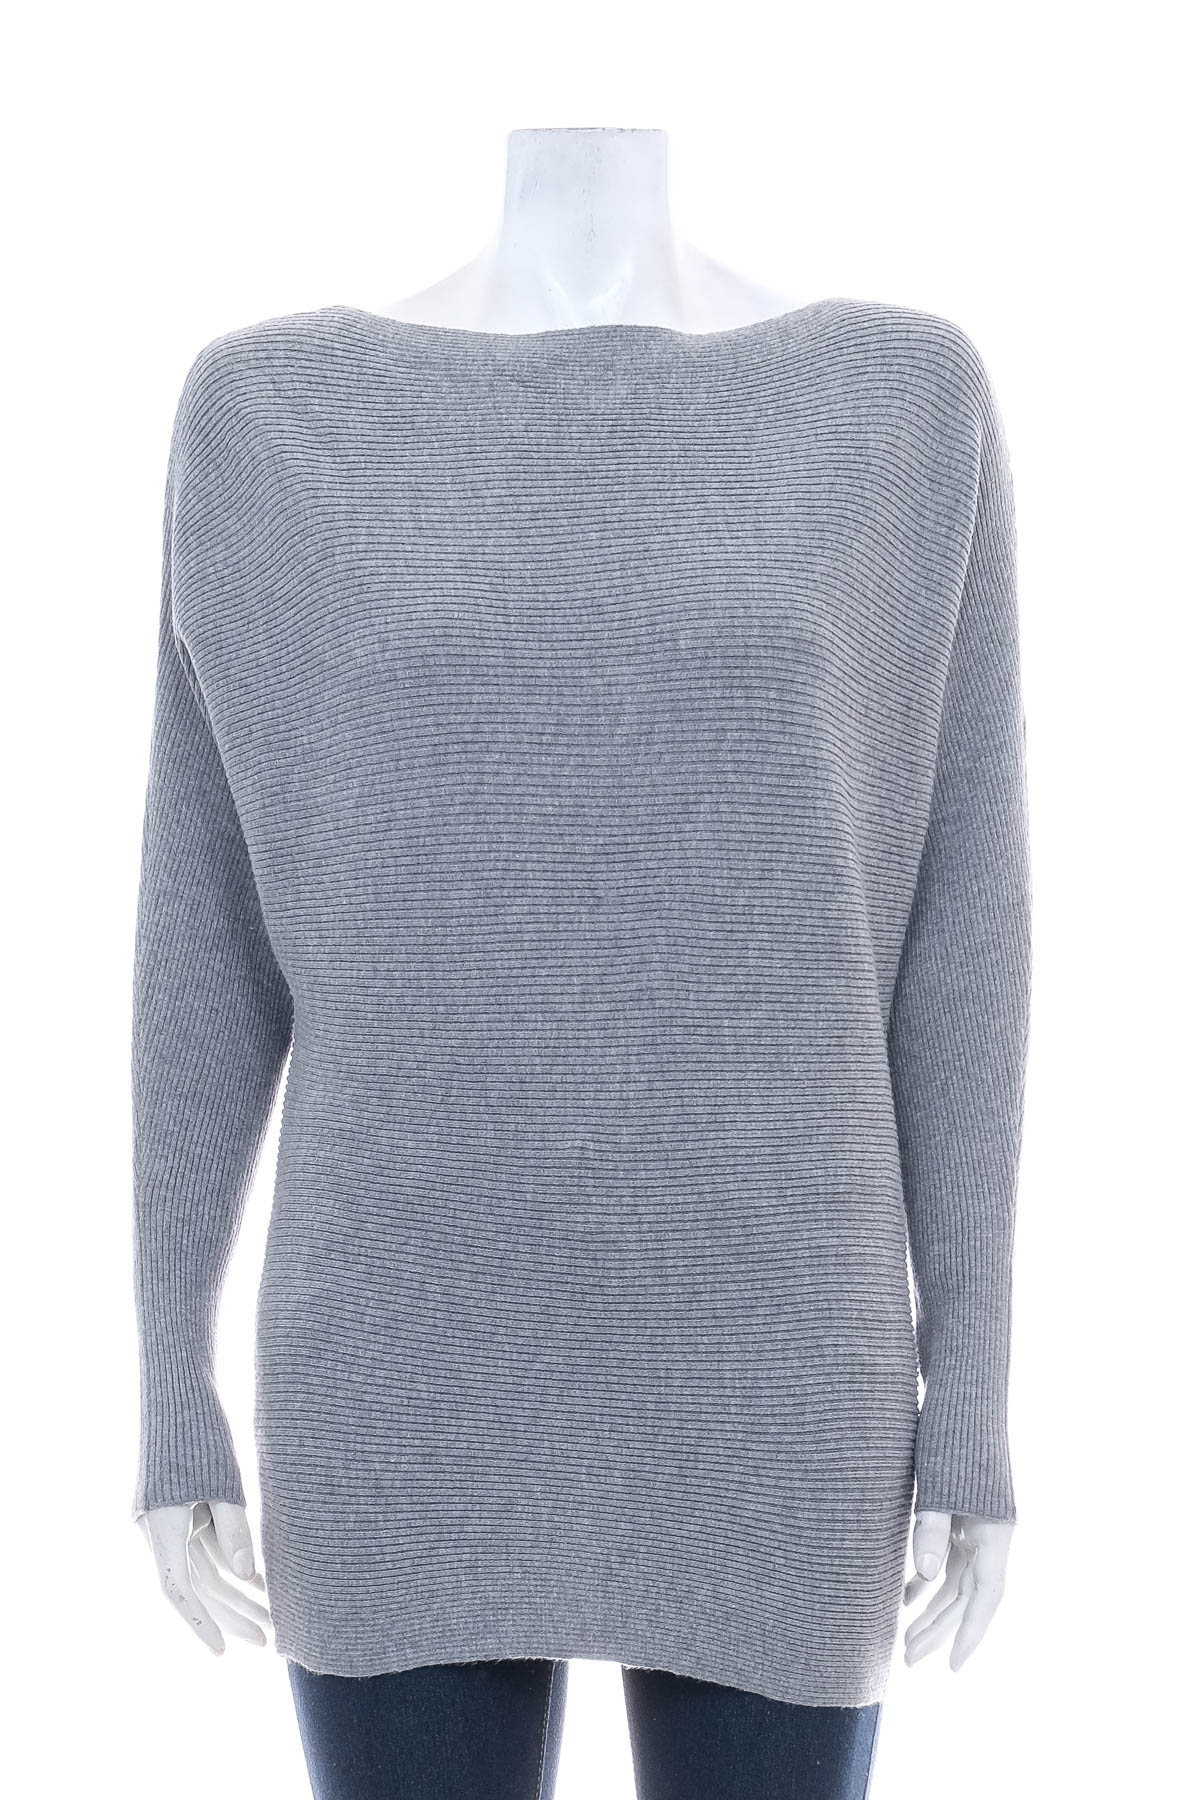 Women's sweater - Belldini - 0